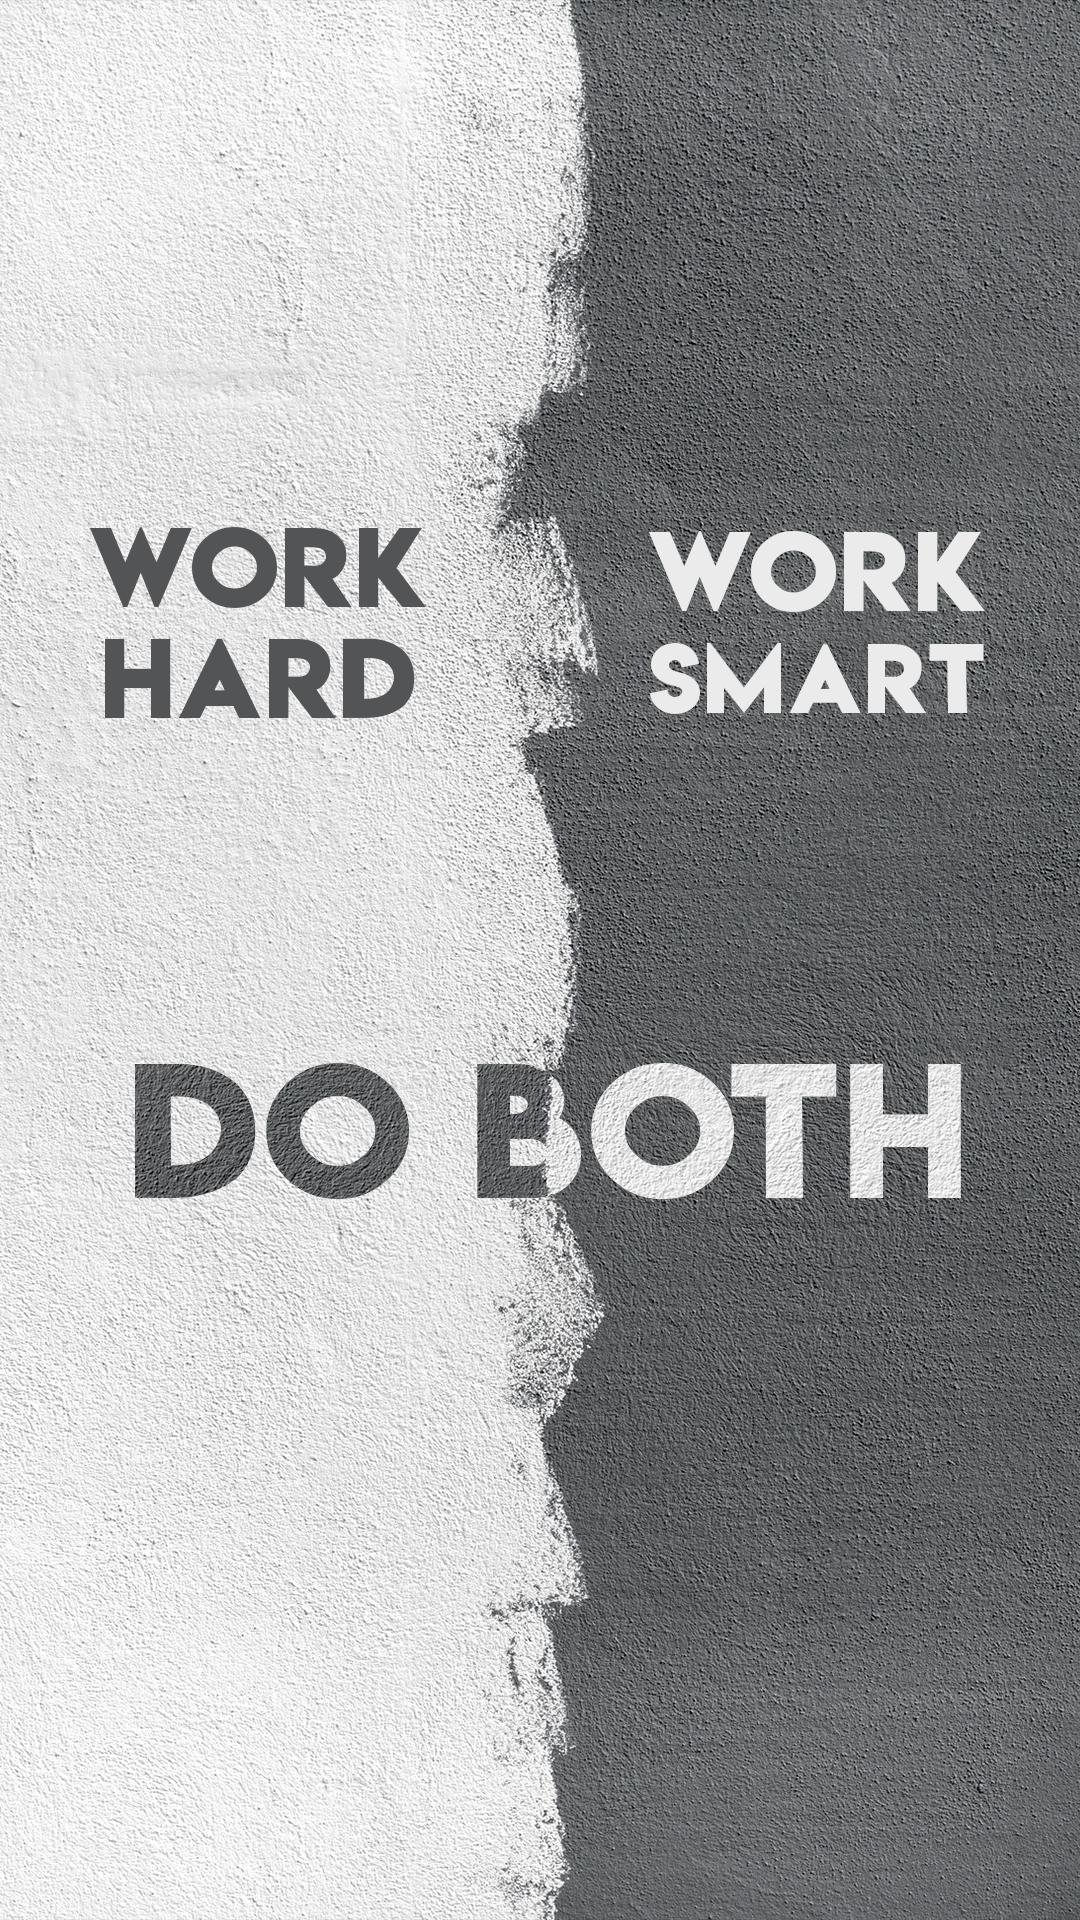 Work Hard Work Smart Do Both - motivation